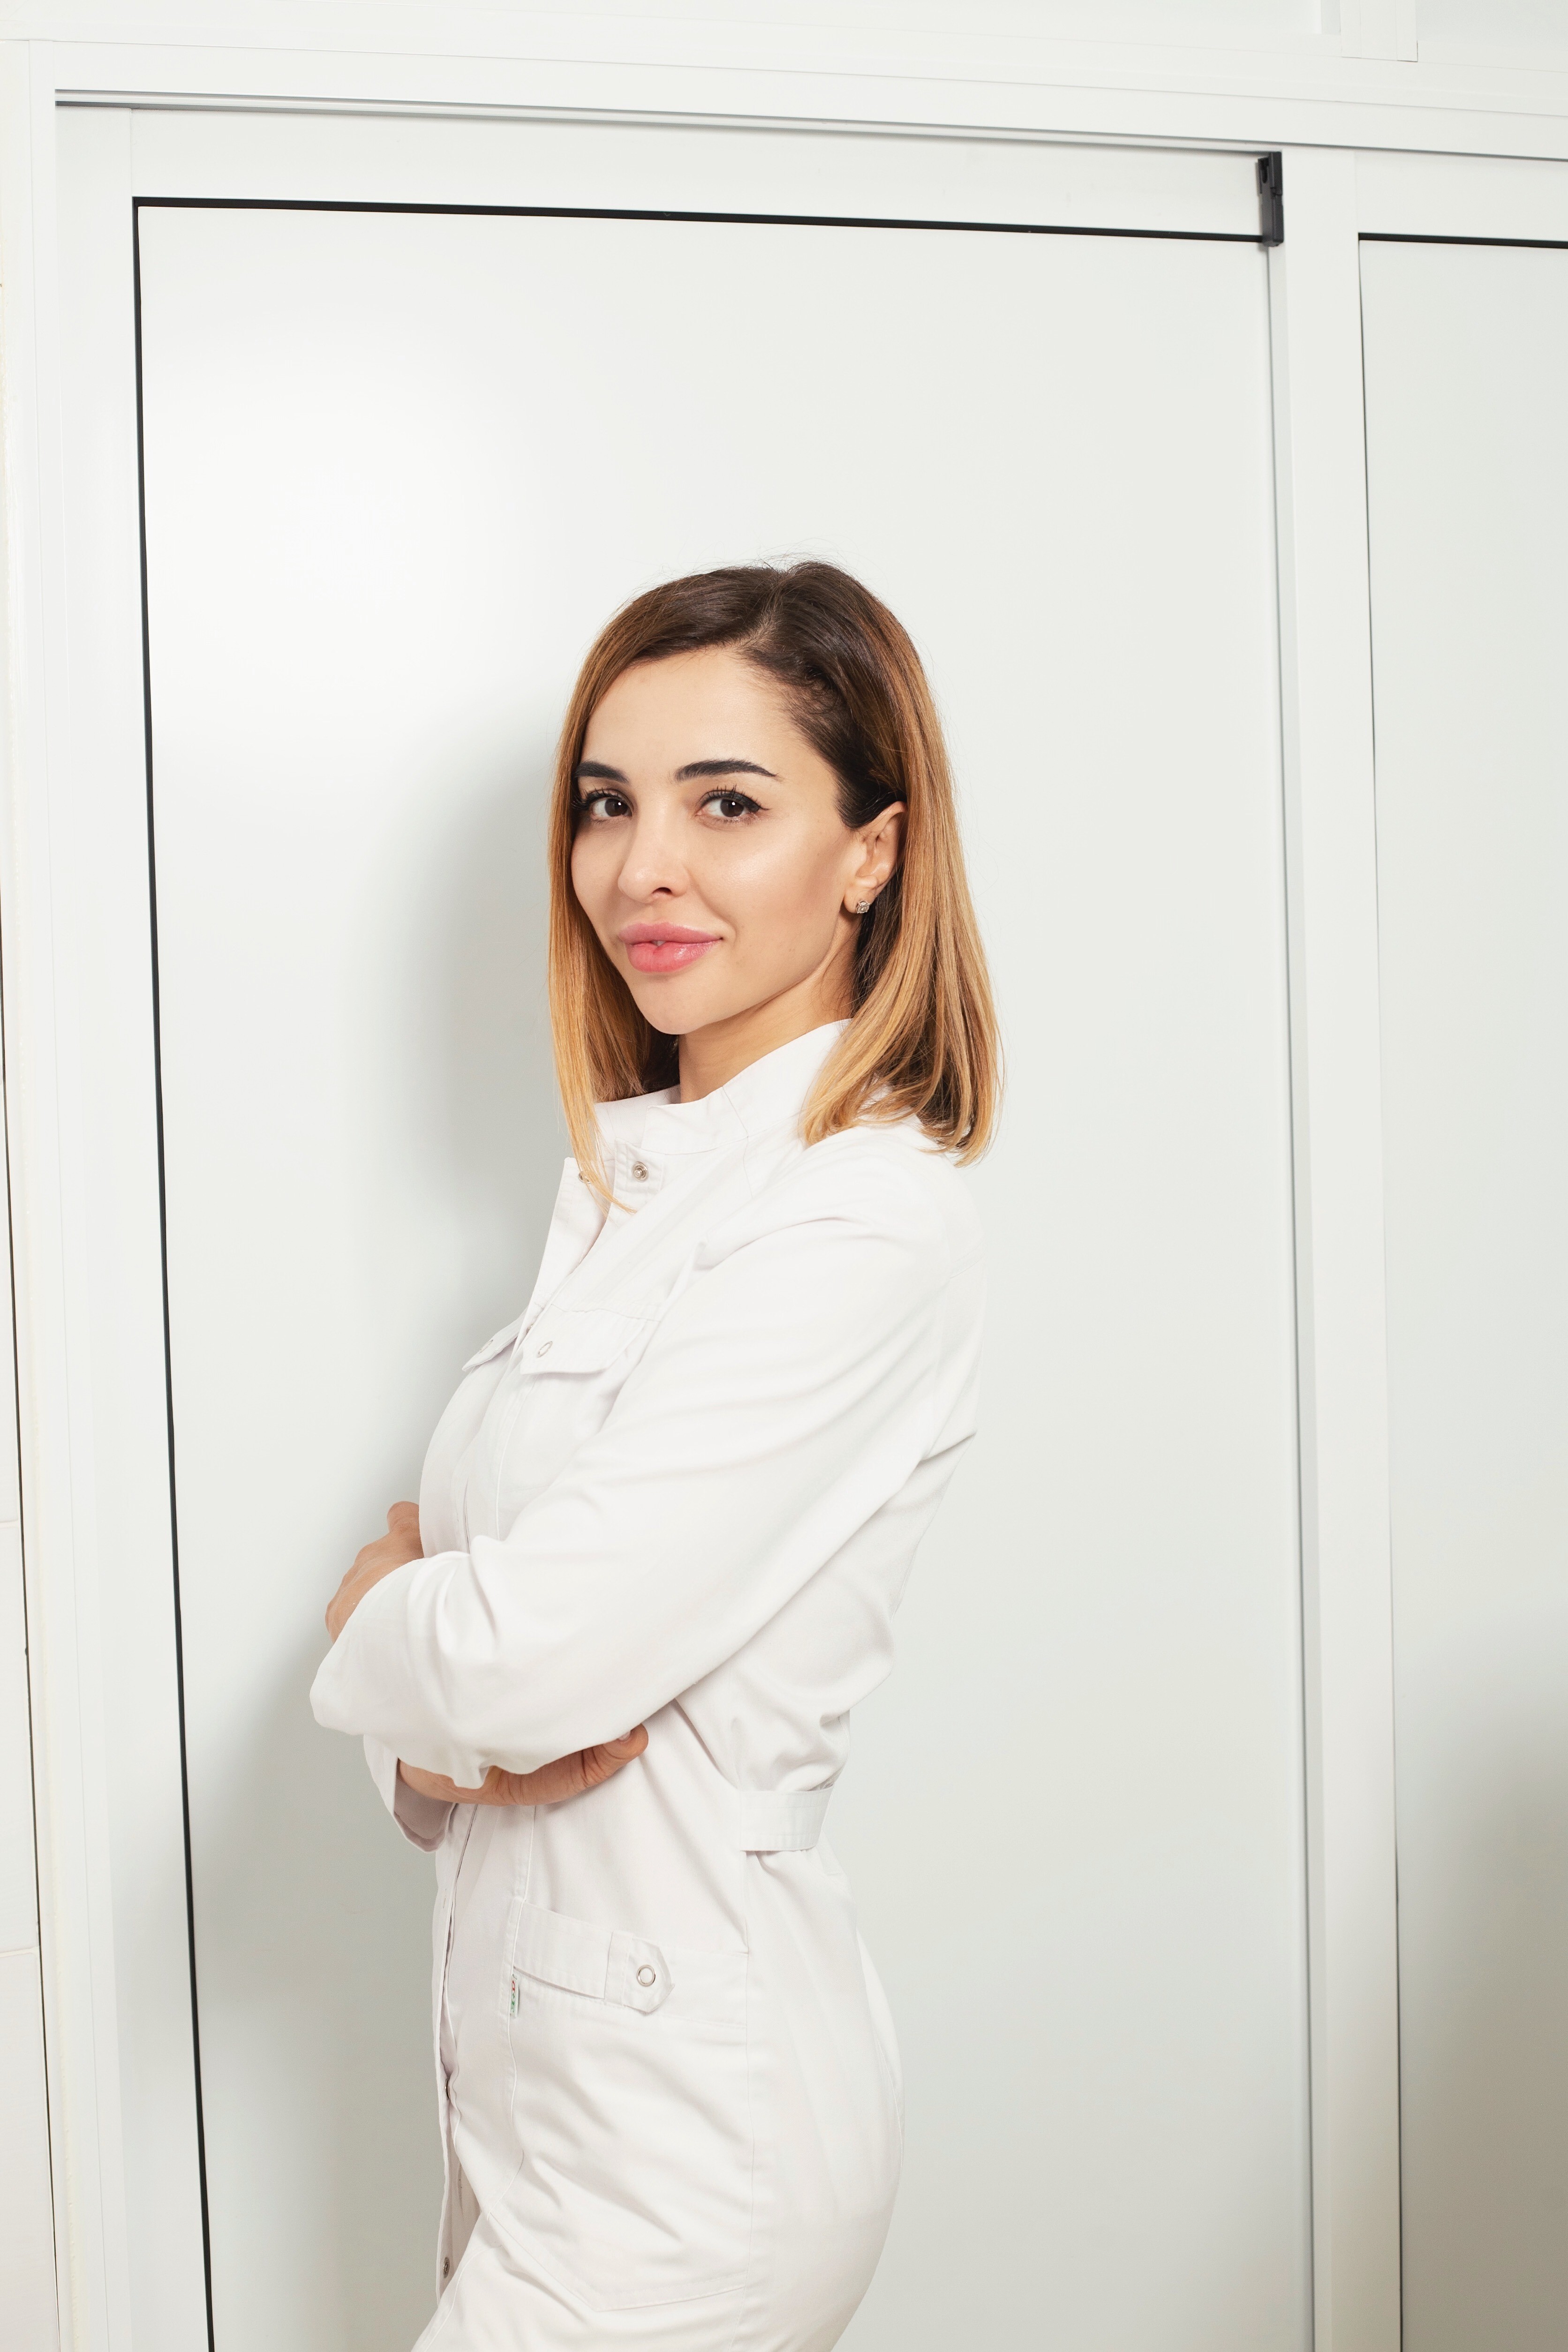 Мадина Байрамукова, врач, дерматолог-косметолог, ведущий специалист клиники «МаРусМед»: